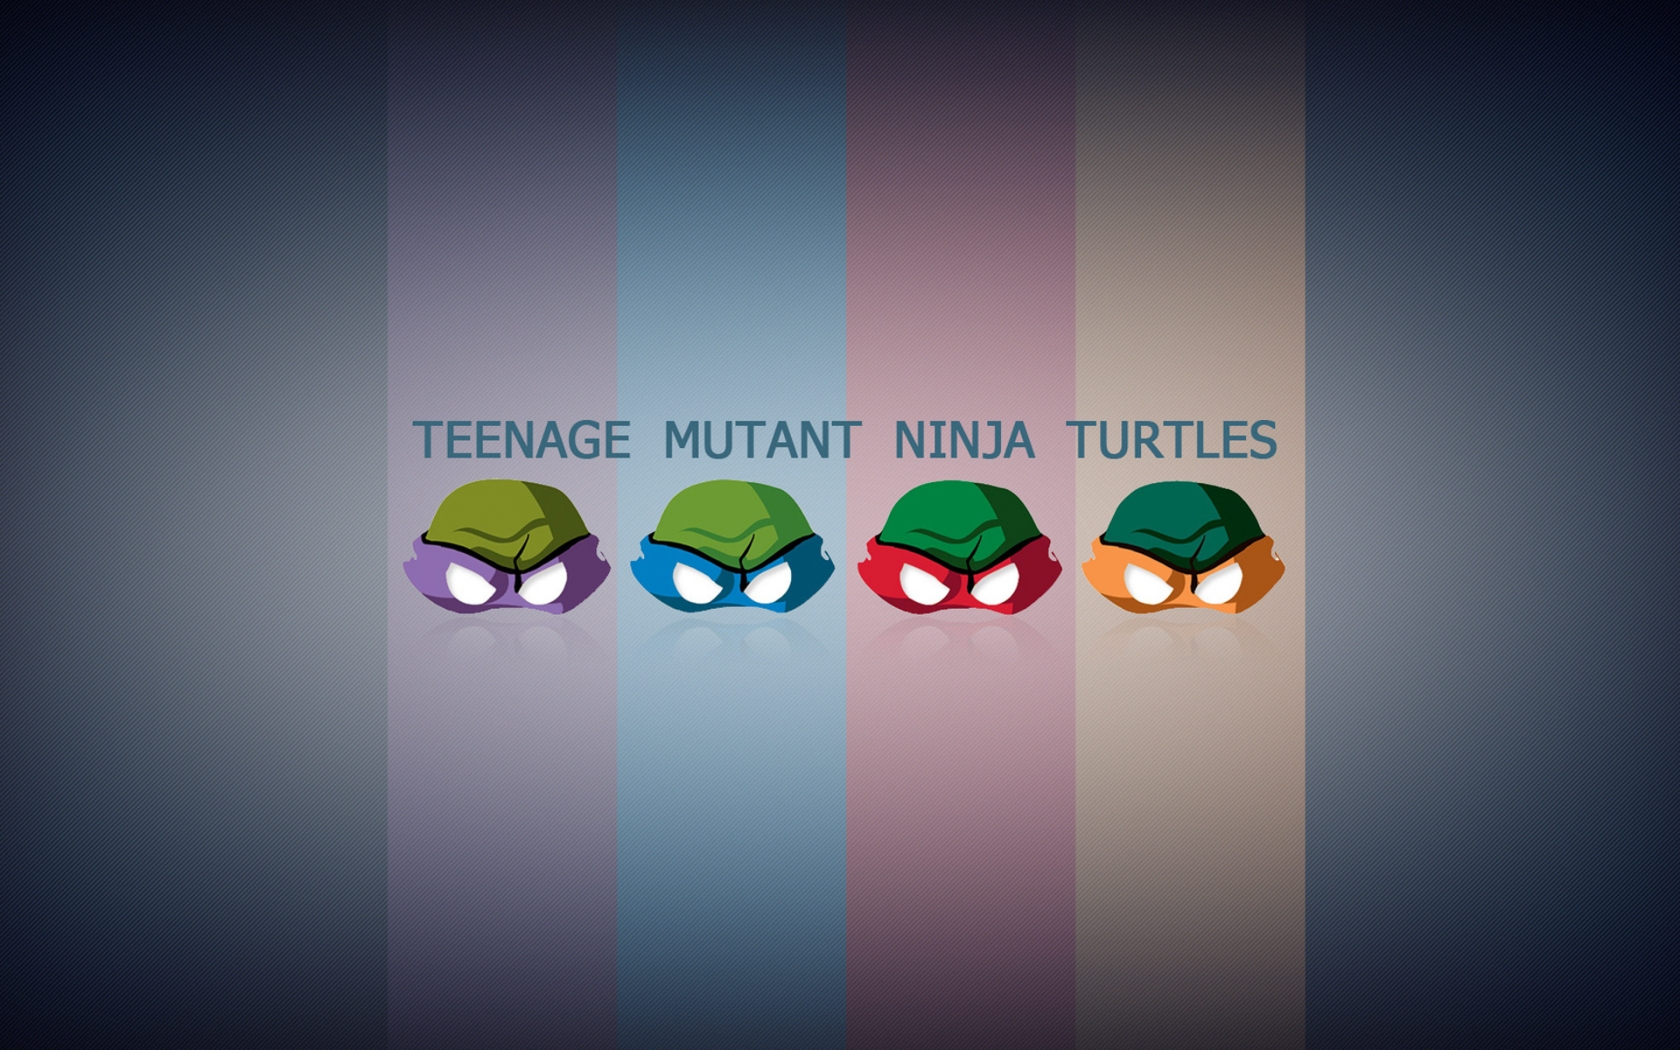 Teengae Mutant Ninja Turtles for 1680 x 1050 widescreen resolution